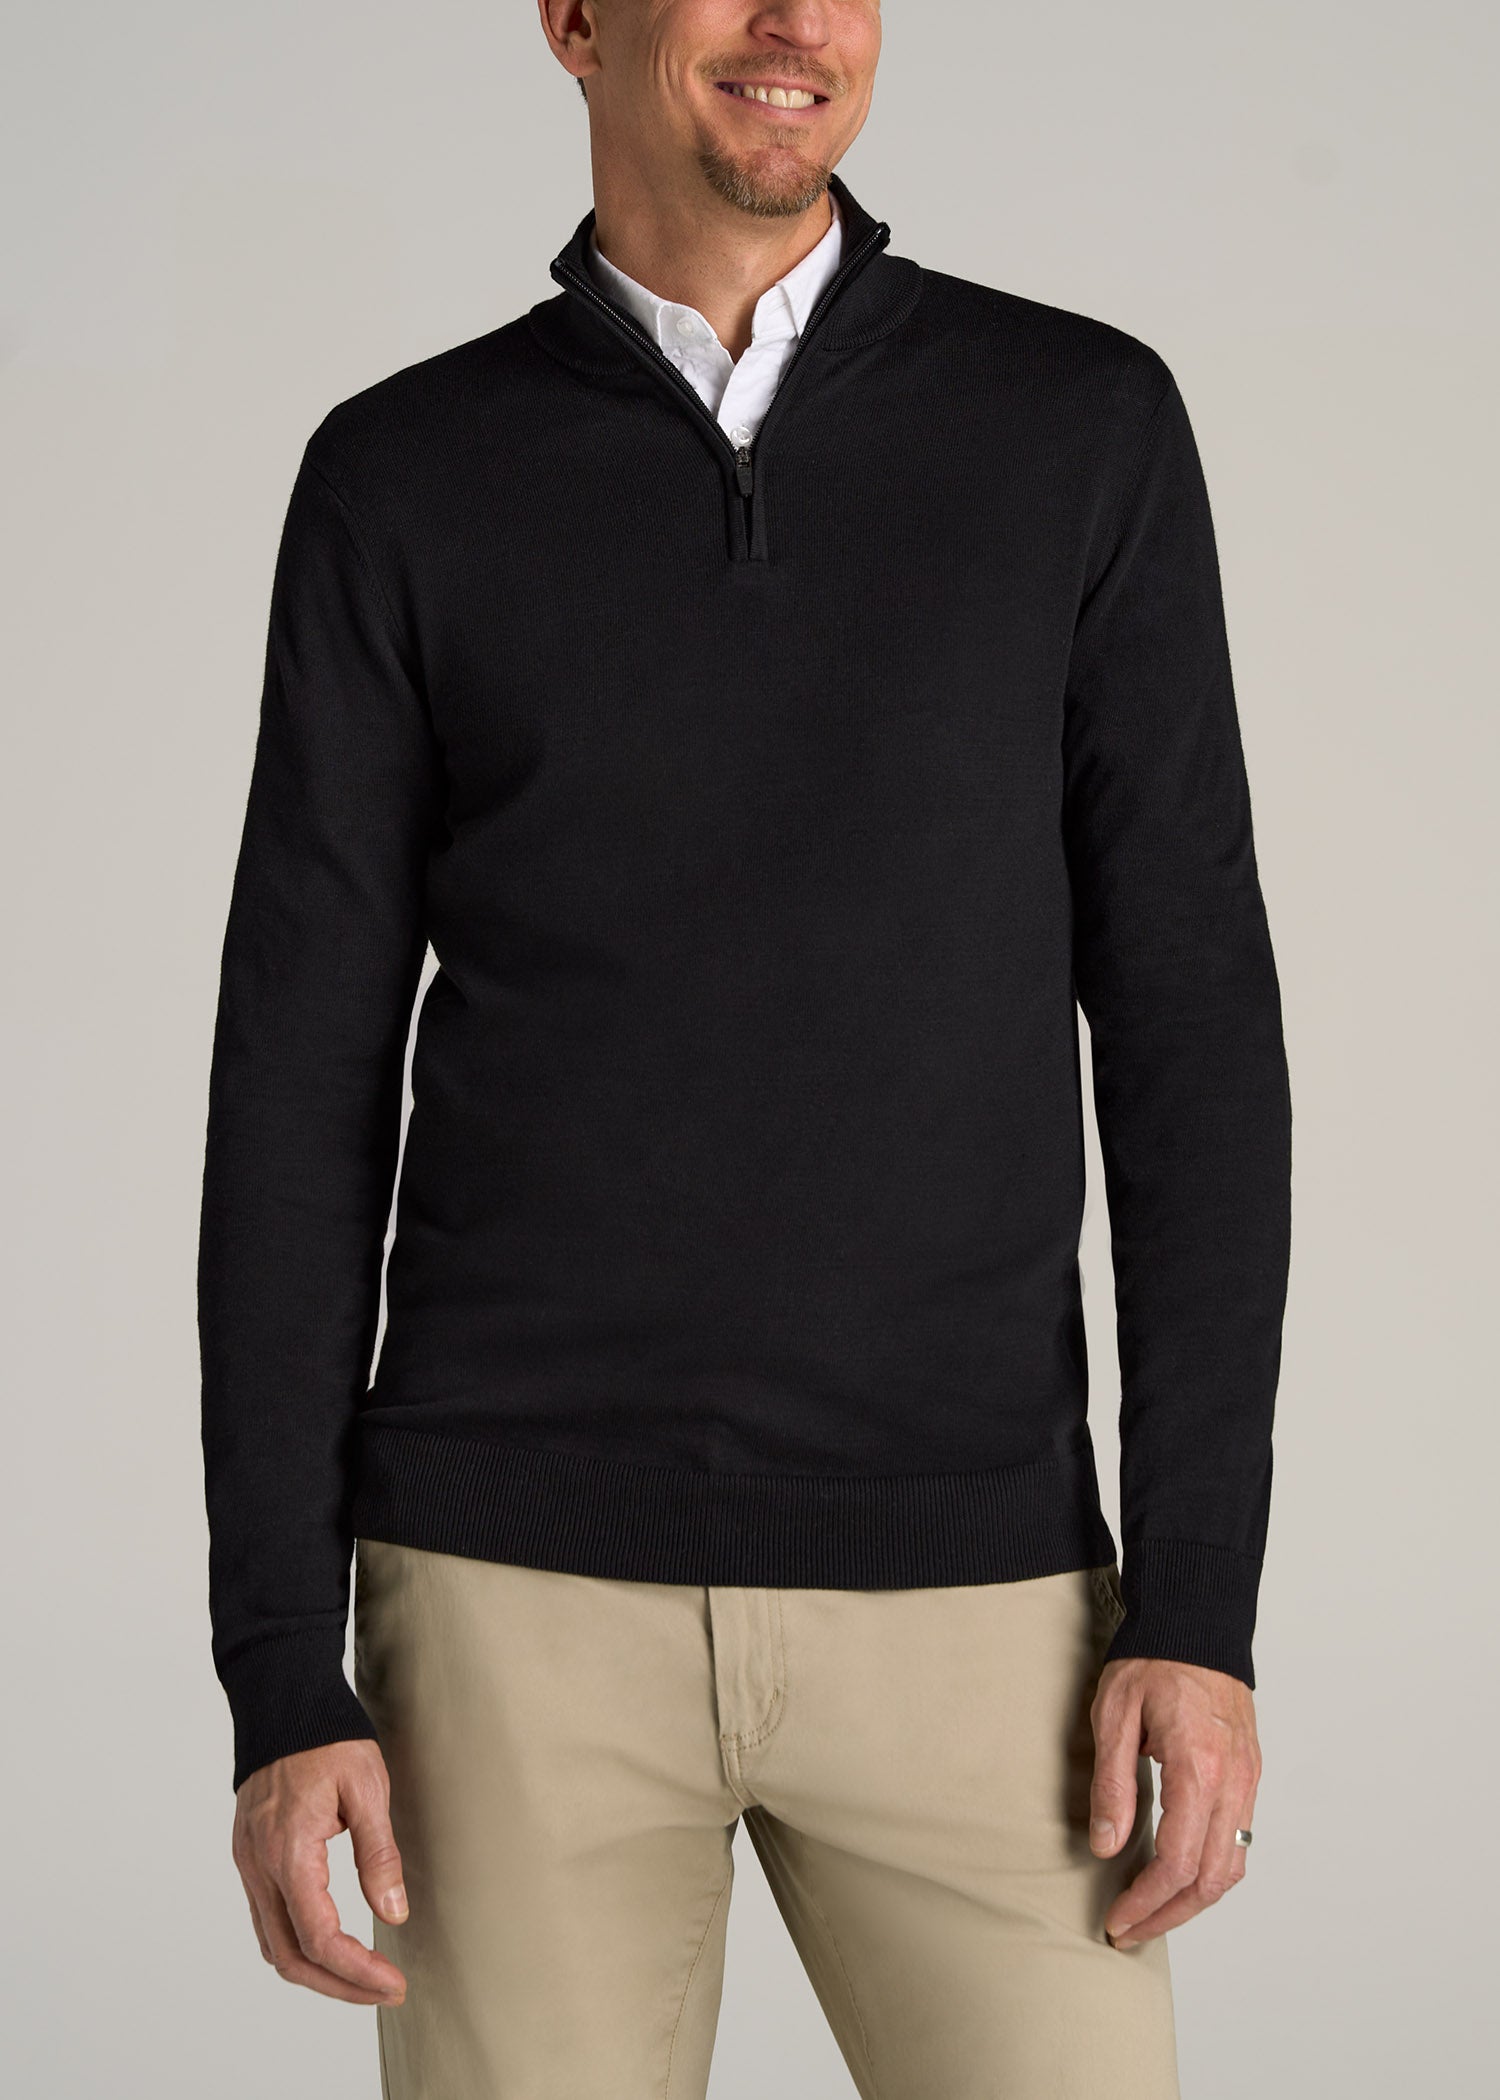 Everyday Quarter-Zip Tall Men's Sweater in Black